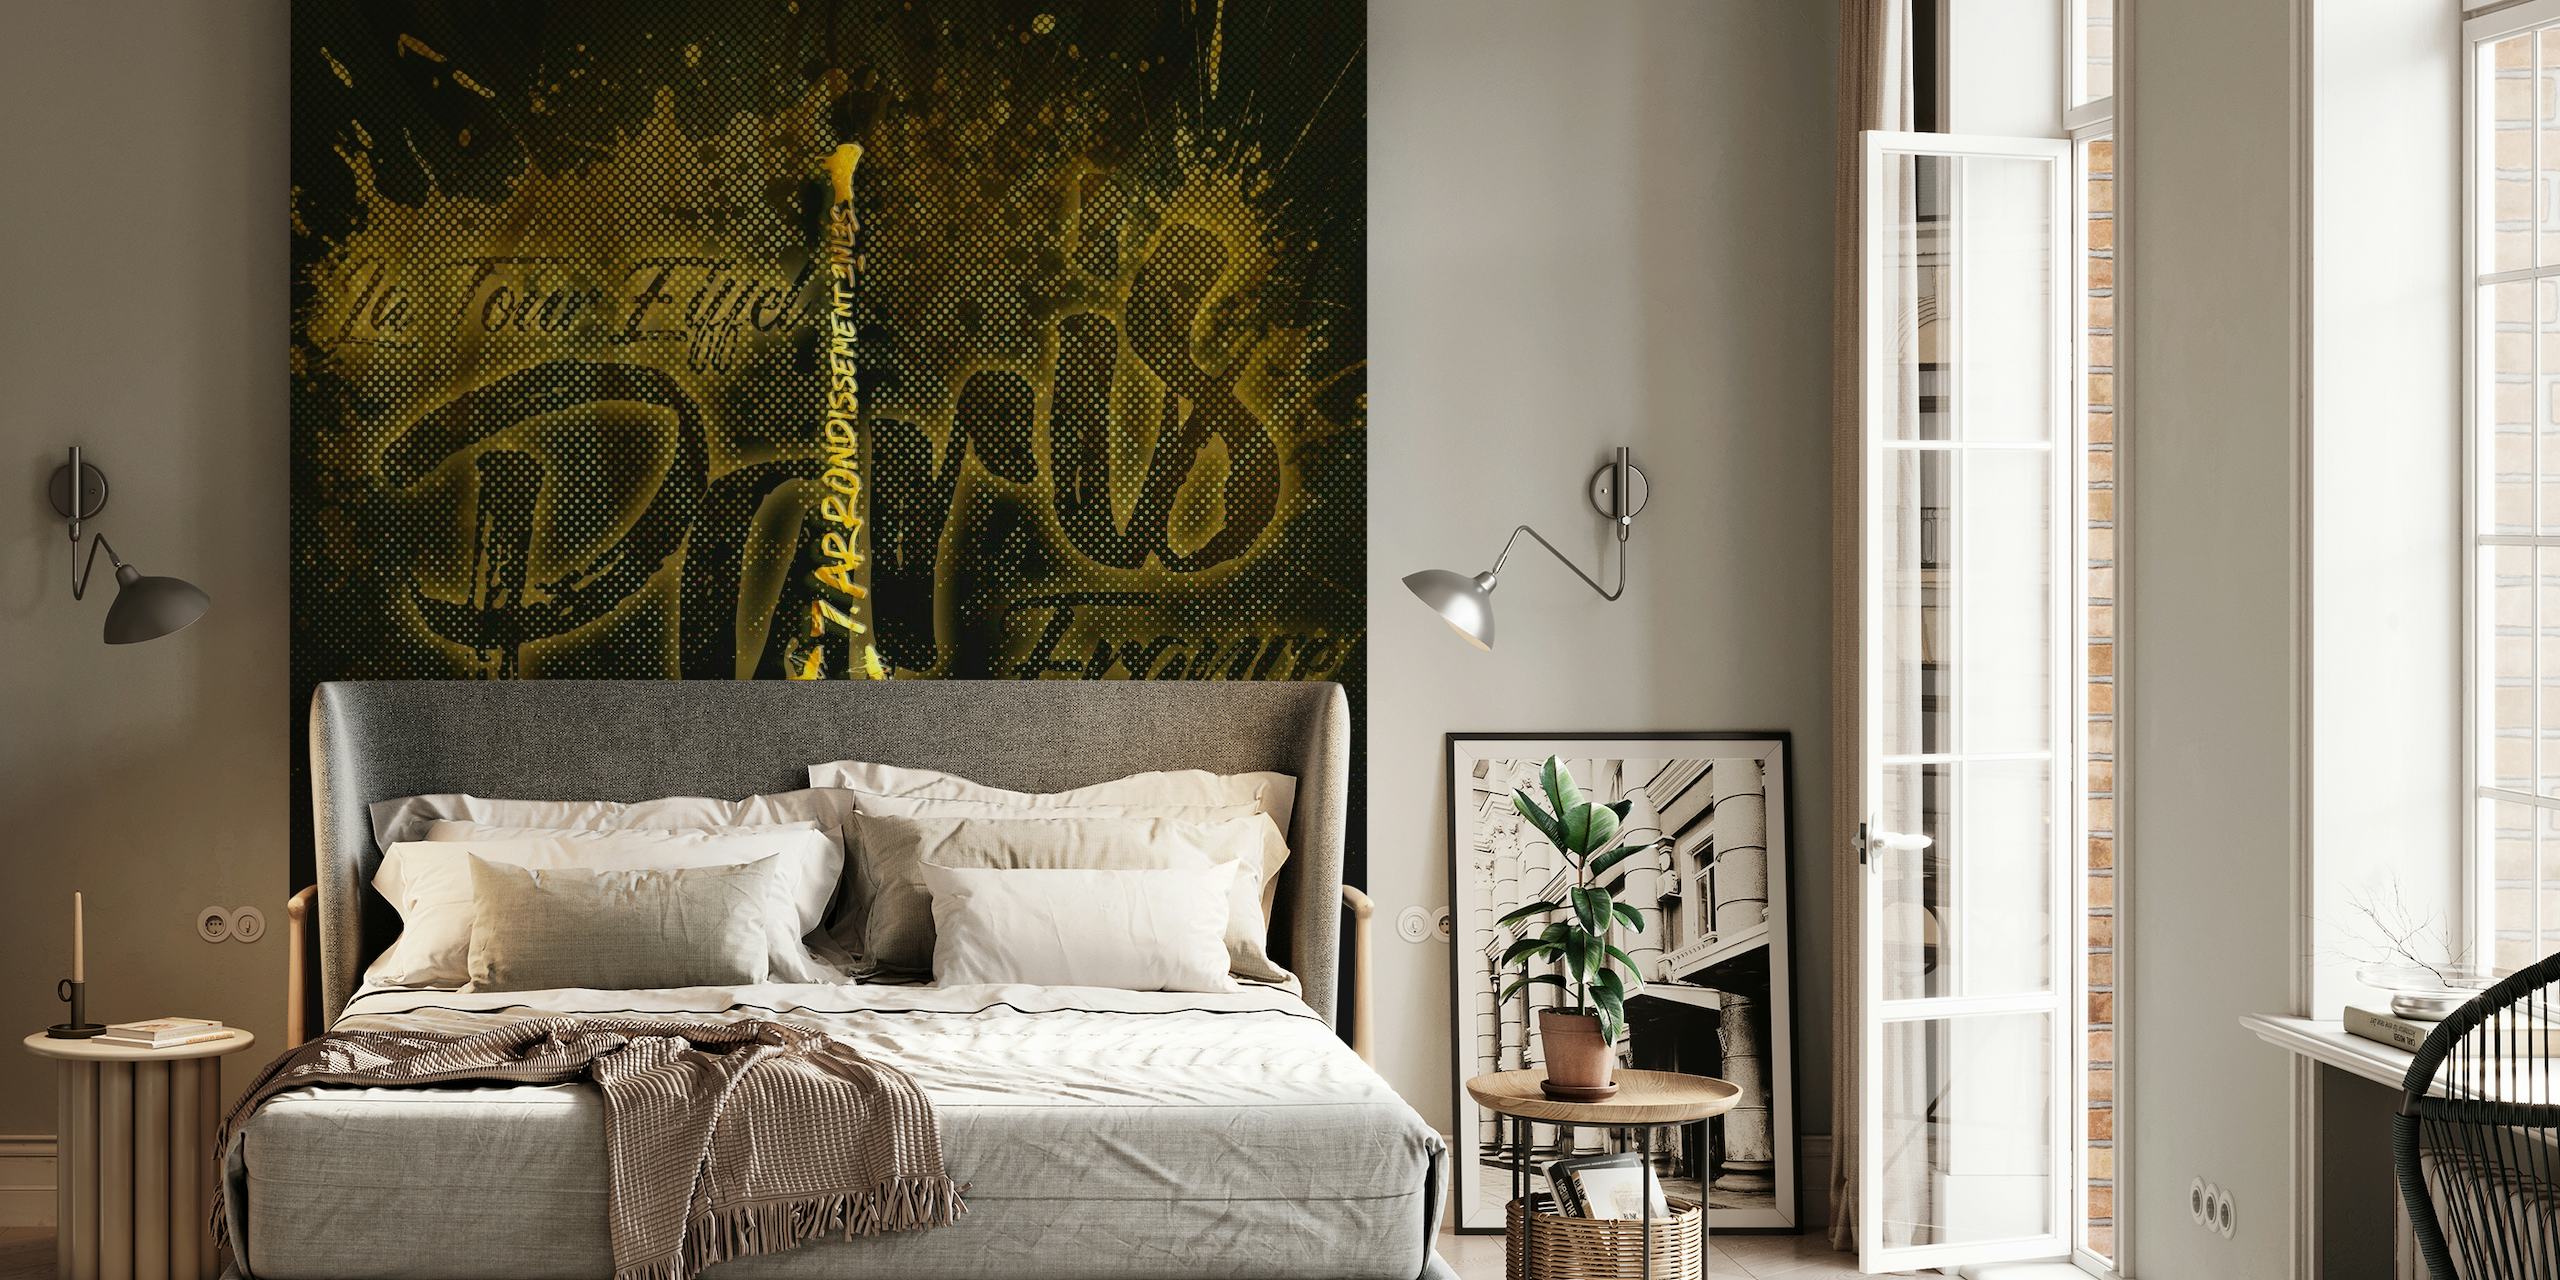 Eiffel Tower Golden Flames papel pintado